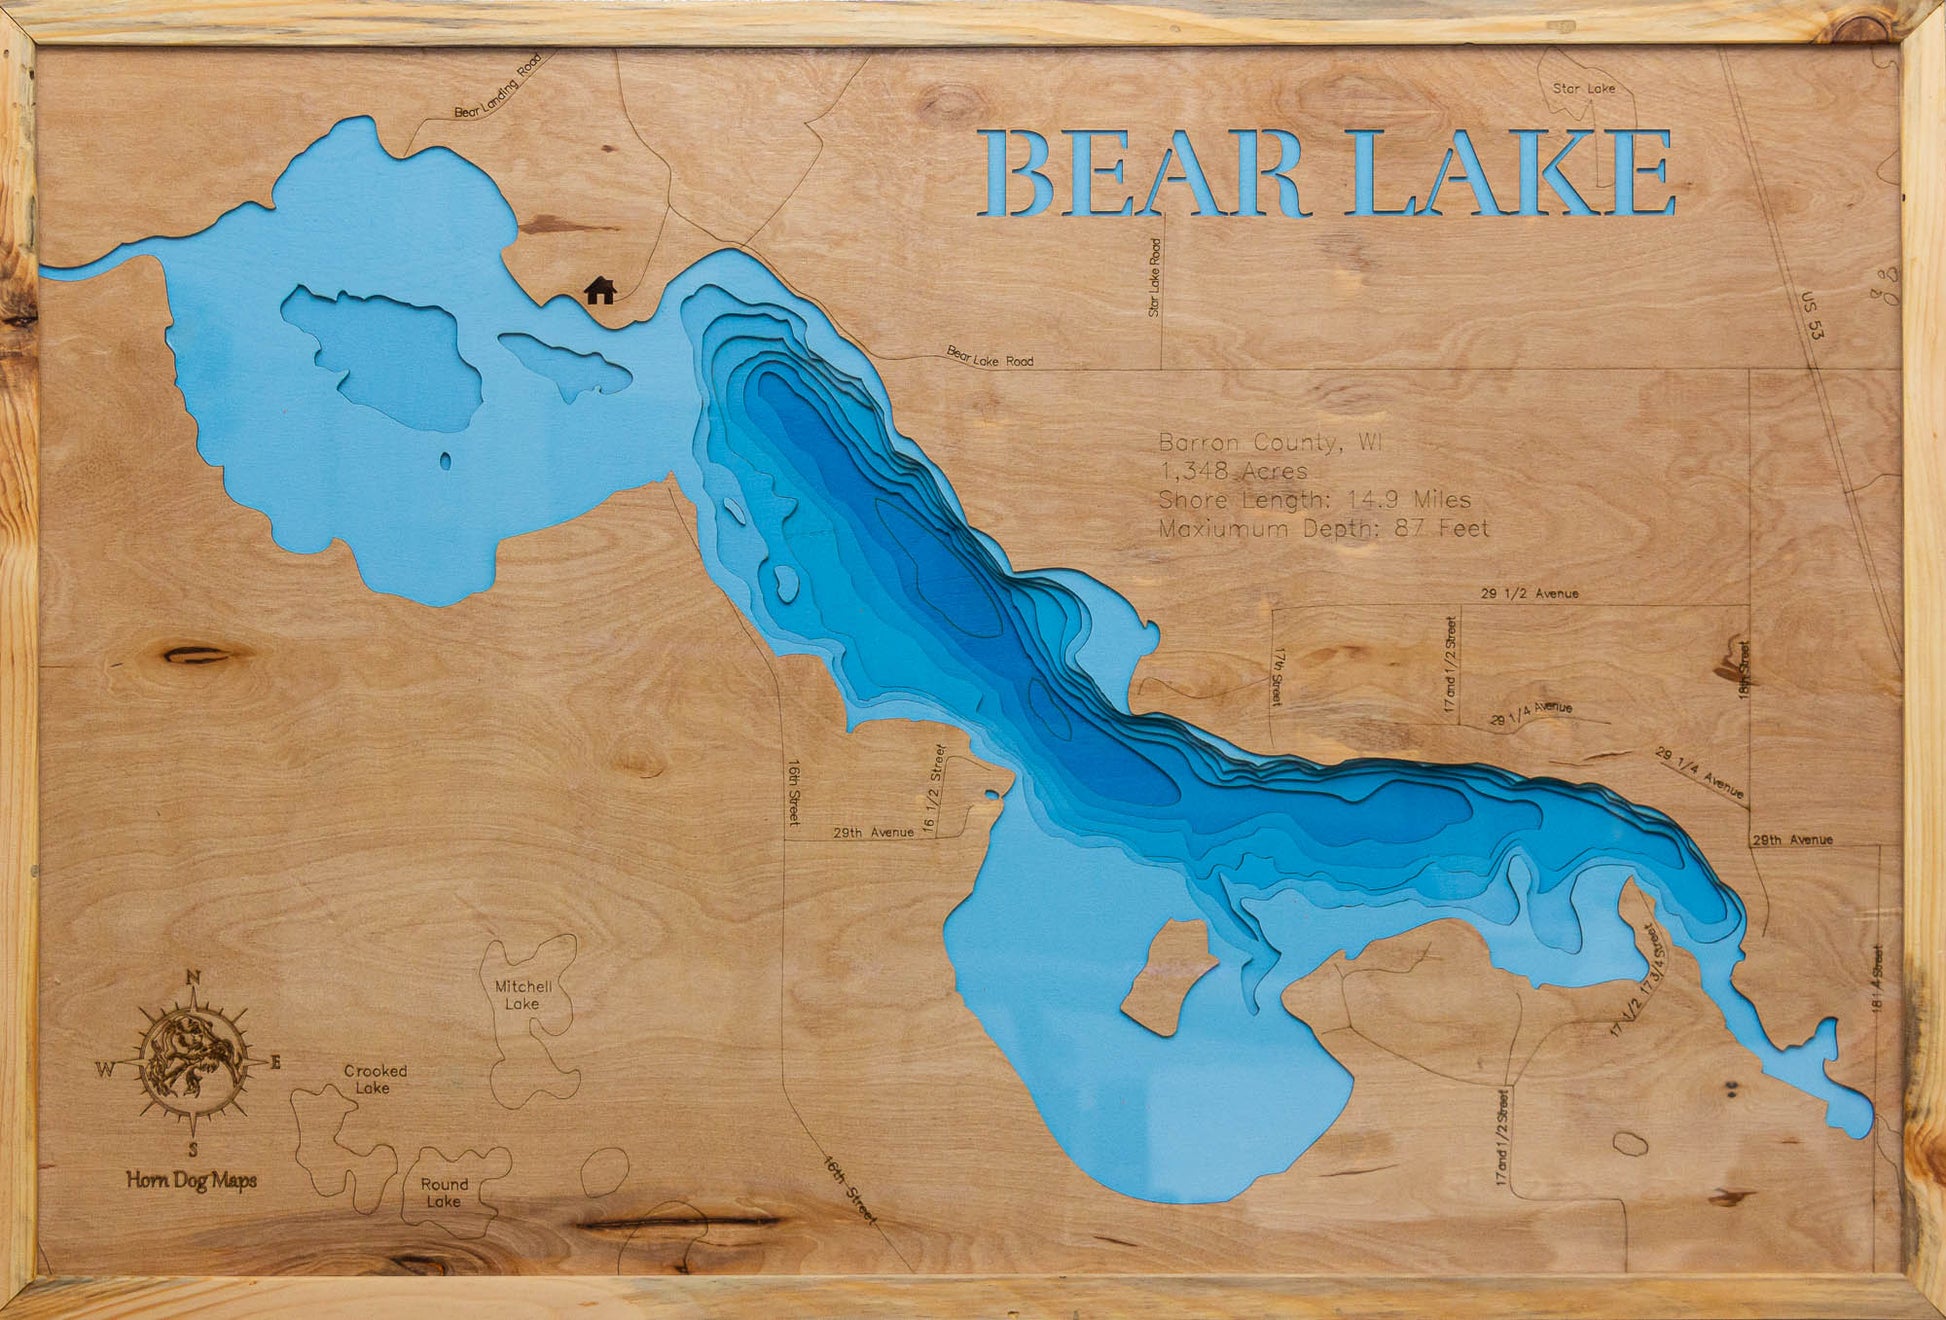 Bear Lake in Barron County, WI